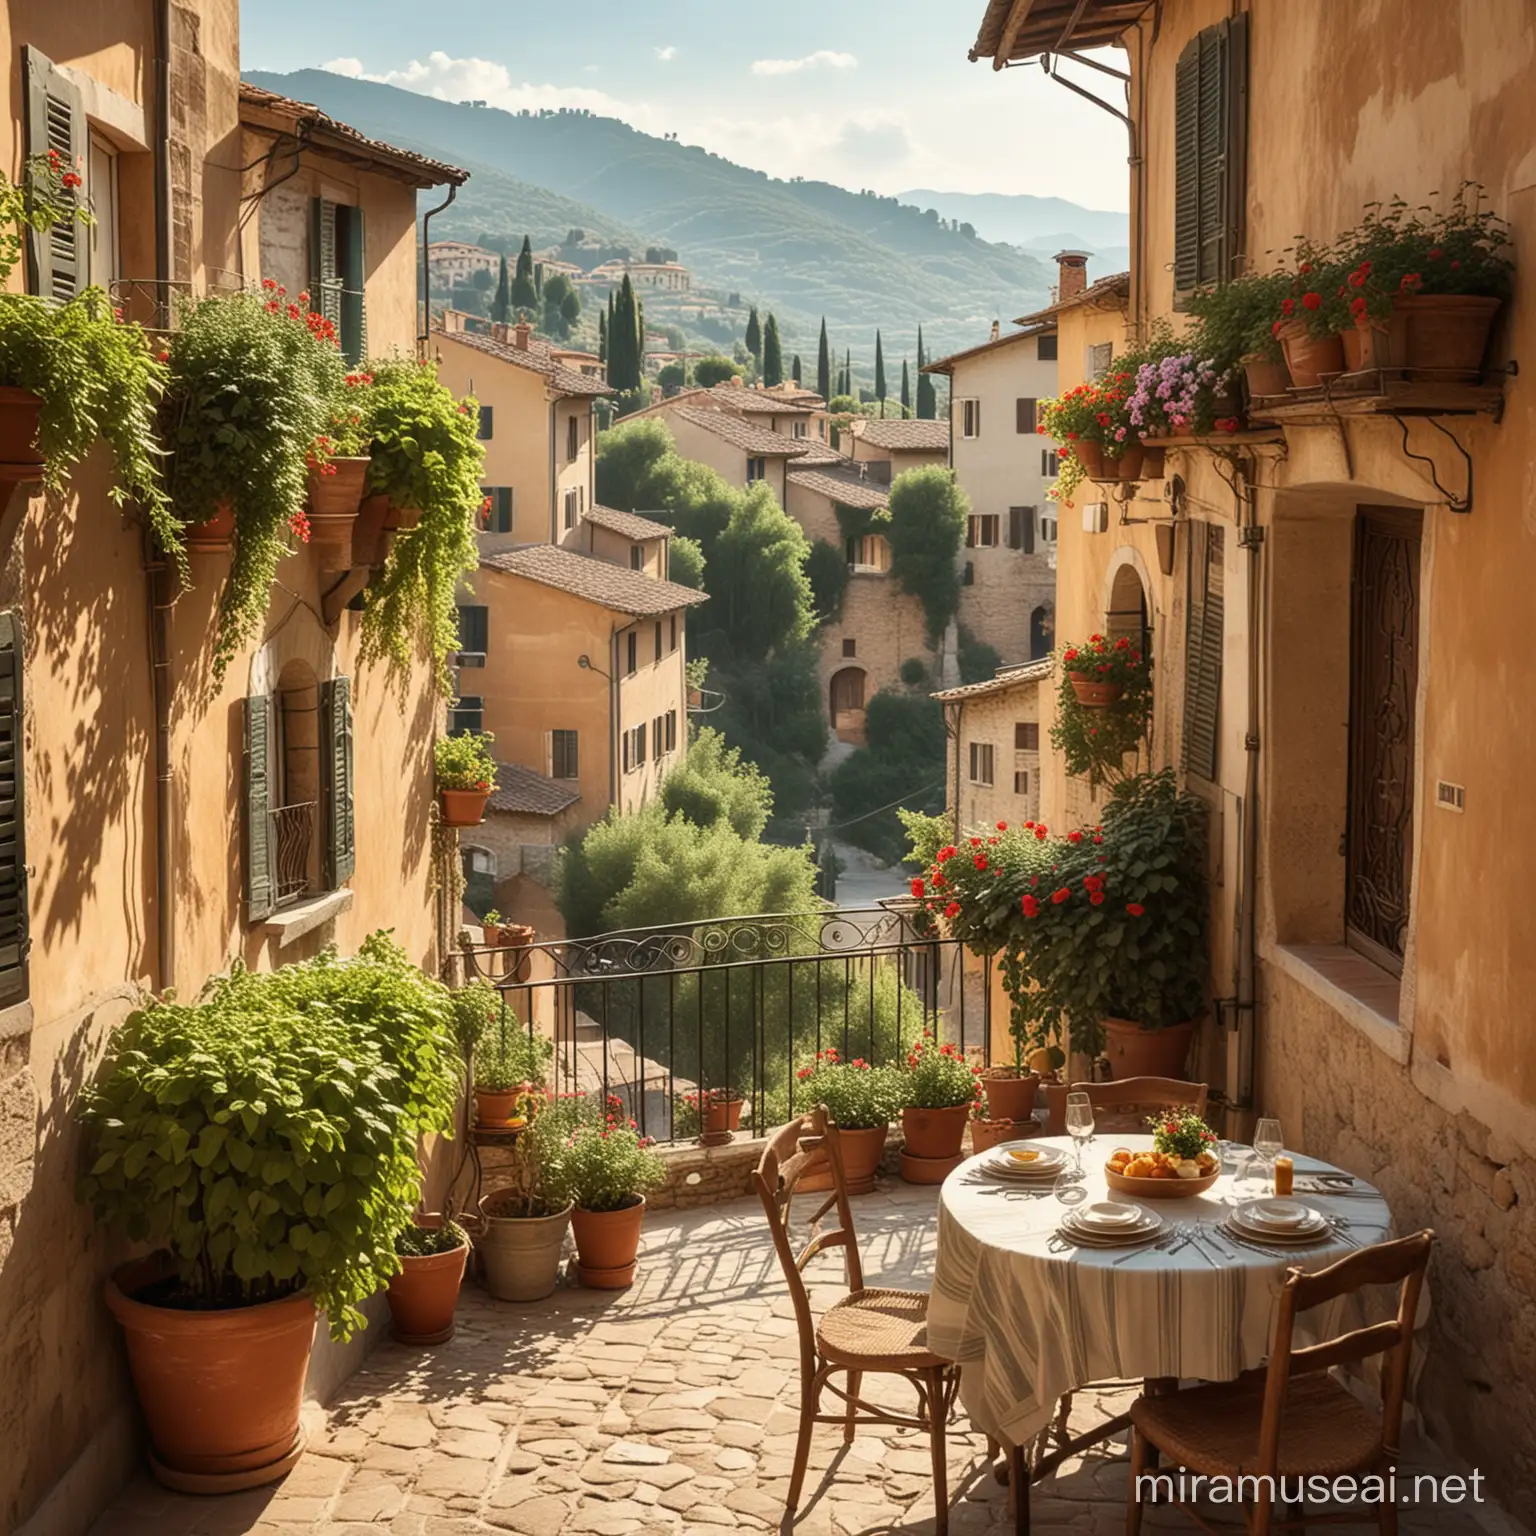 Charming Italian Village Scene Sunny Terrace Overlooking Table and Balcony Landscape